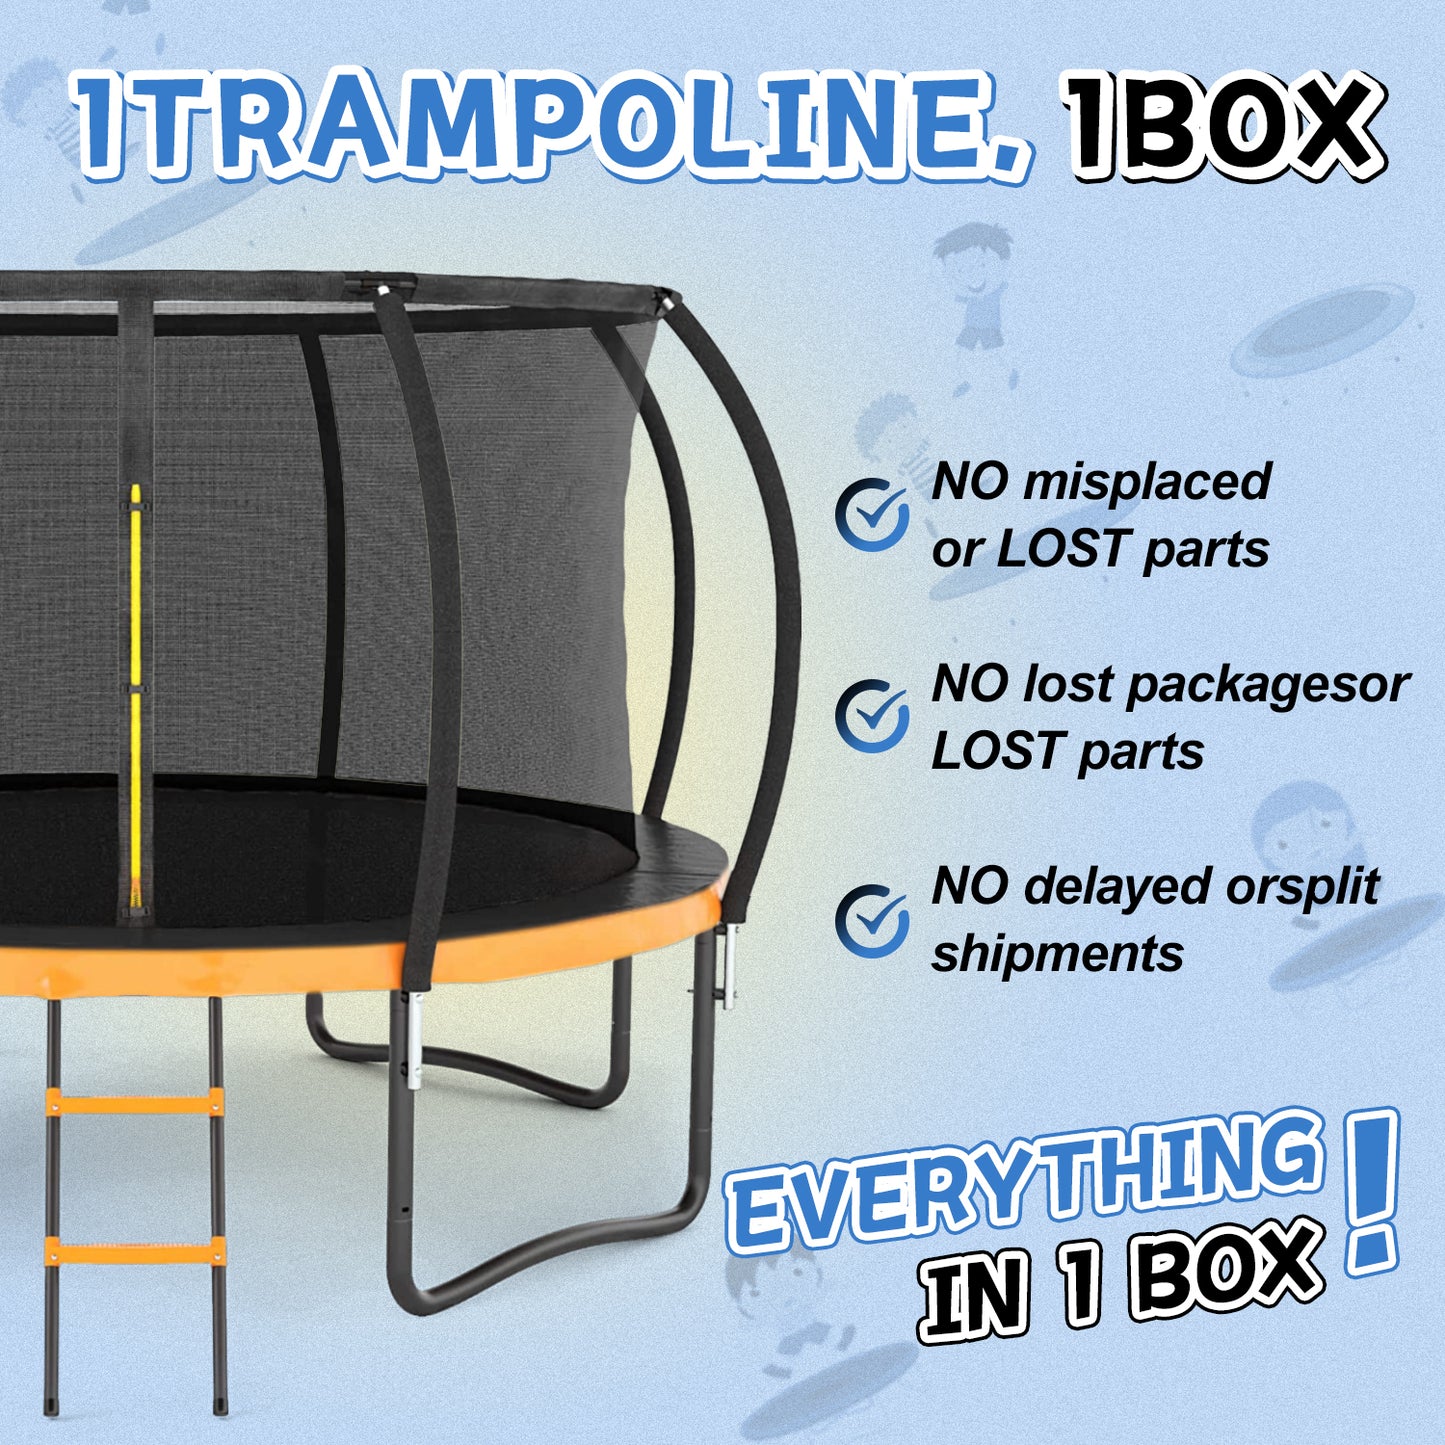 14FT Outdoor Big Trampoline With Inner Safety Enclosure Net, Ladder, PVC Spring Cover Padding, For Kids, Black&Orange Color